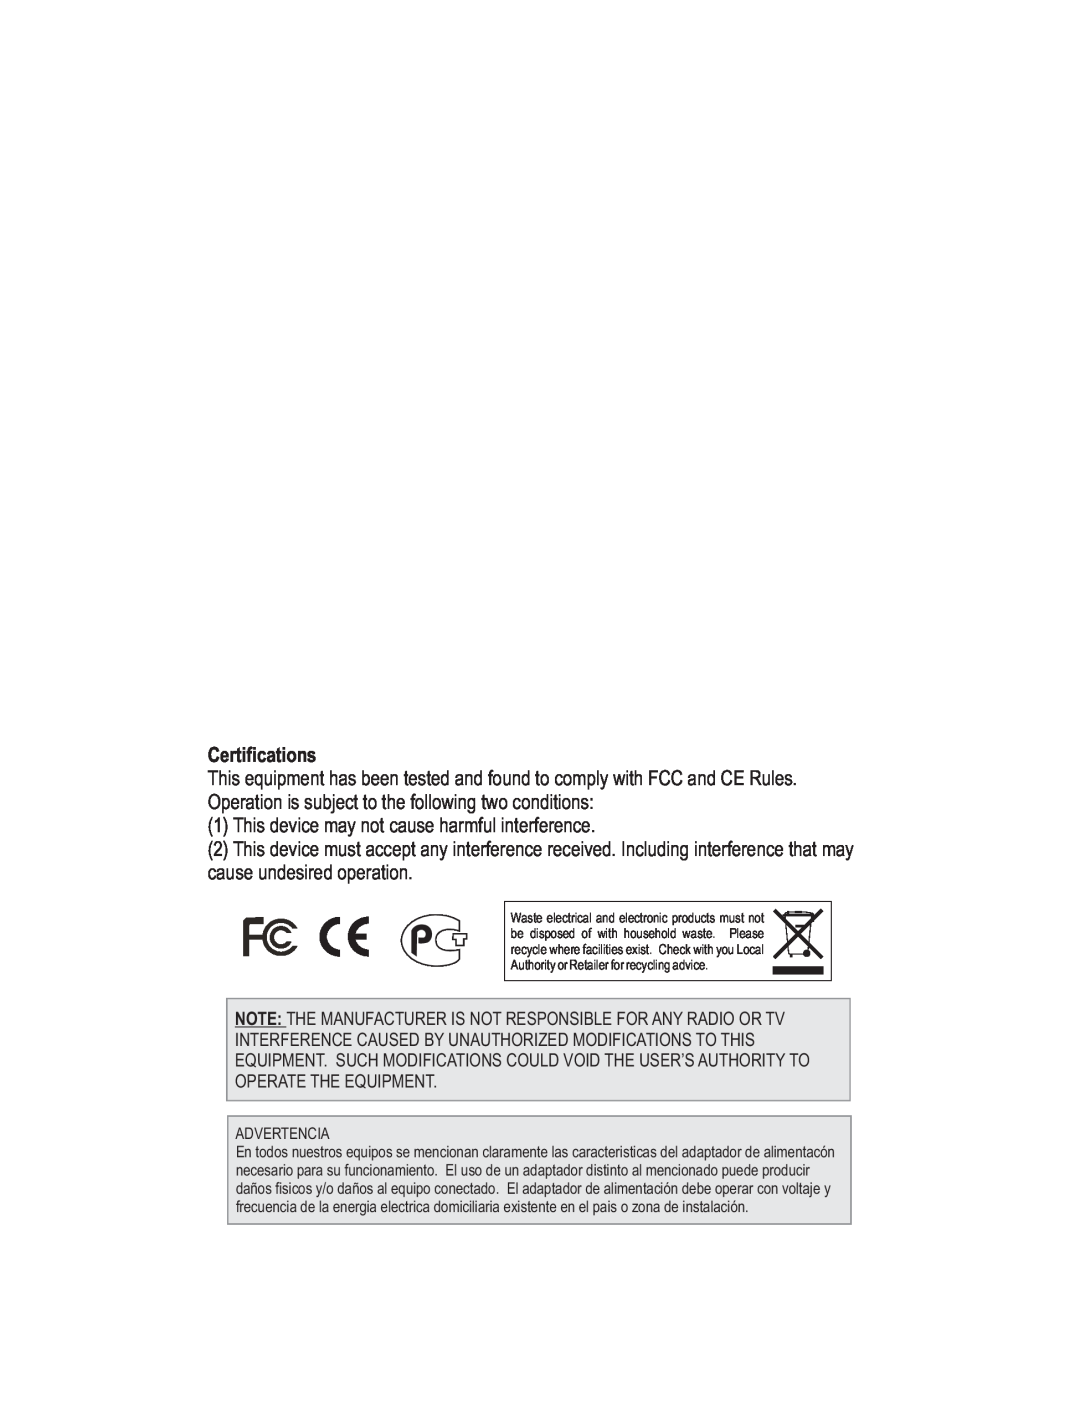 TRENDnet Multi-Function Printer manual Certifications 